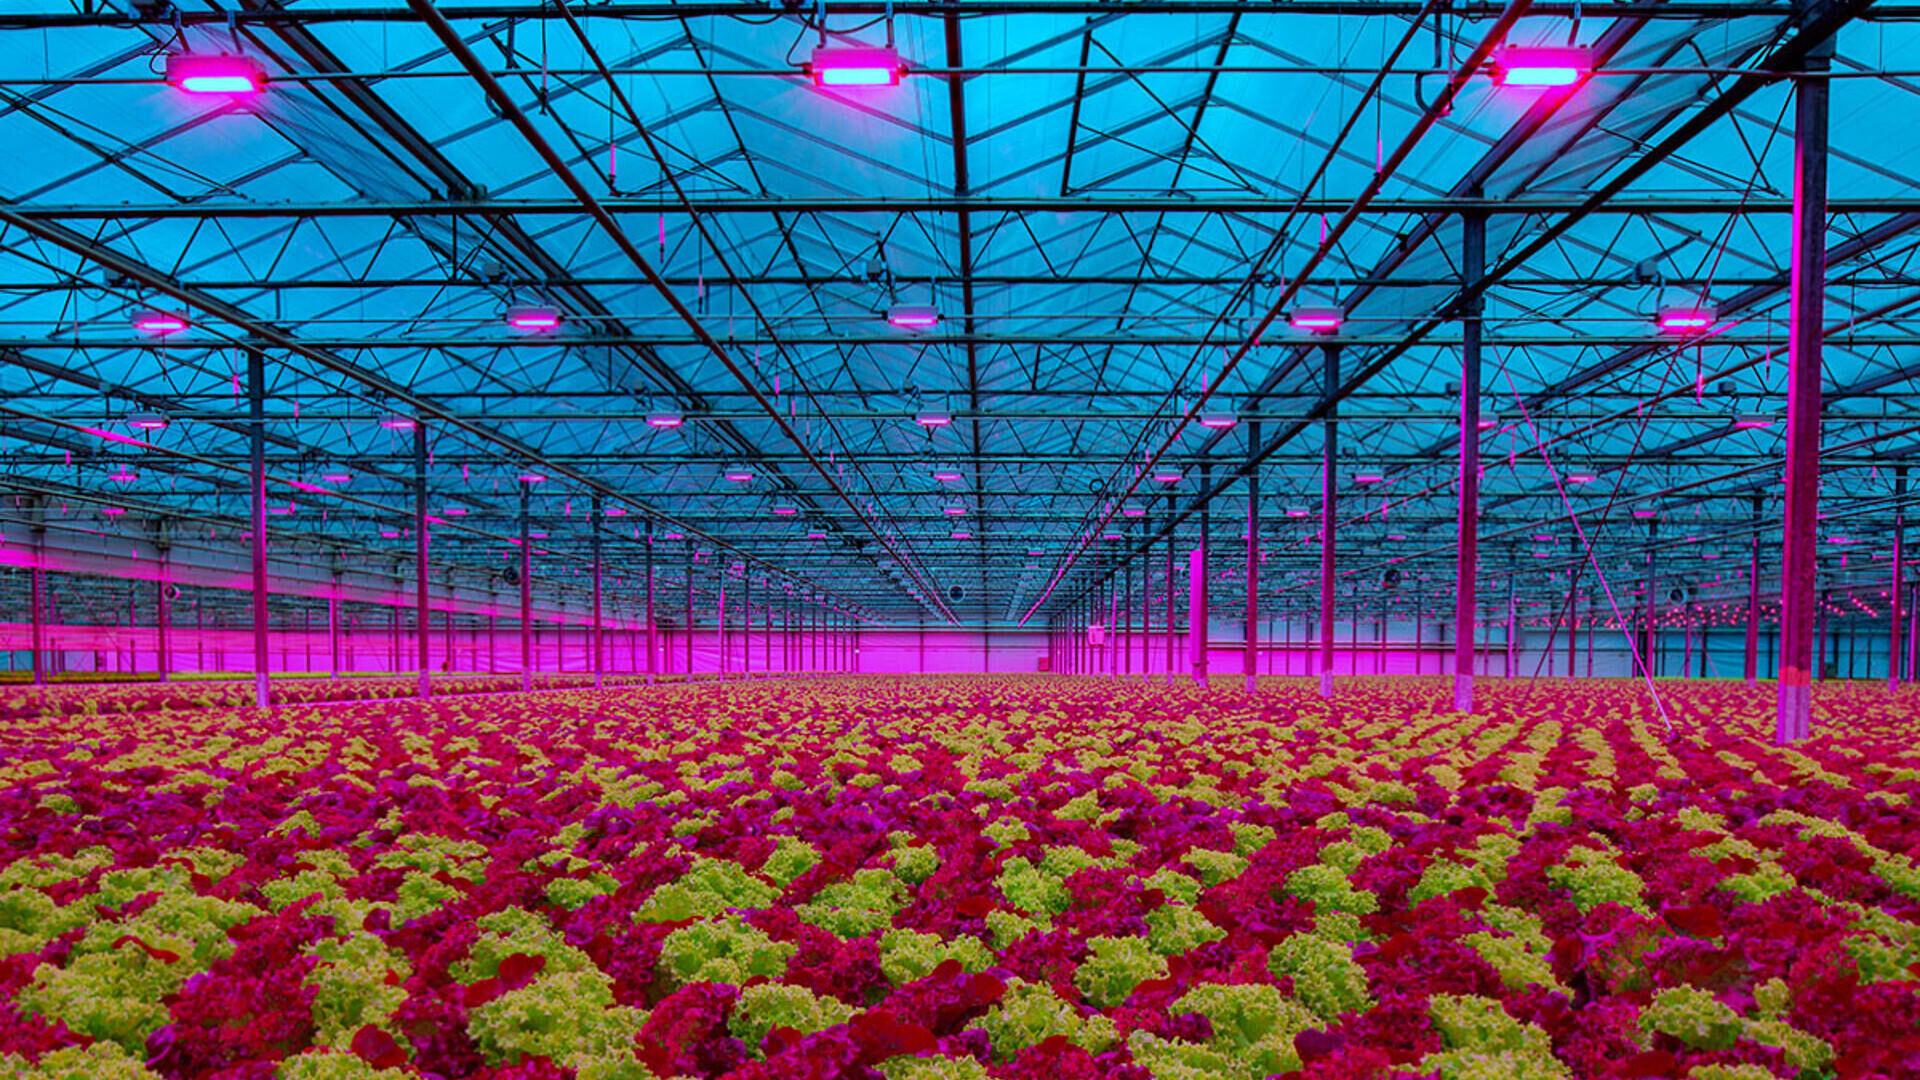 Growing Vegetables Indoors 🥗 Under LED Grow Lights